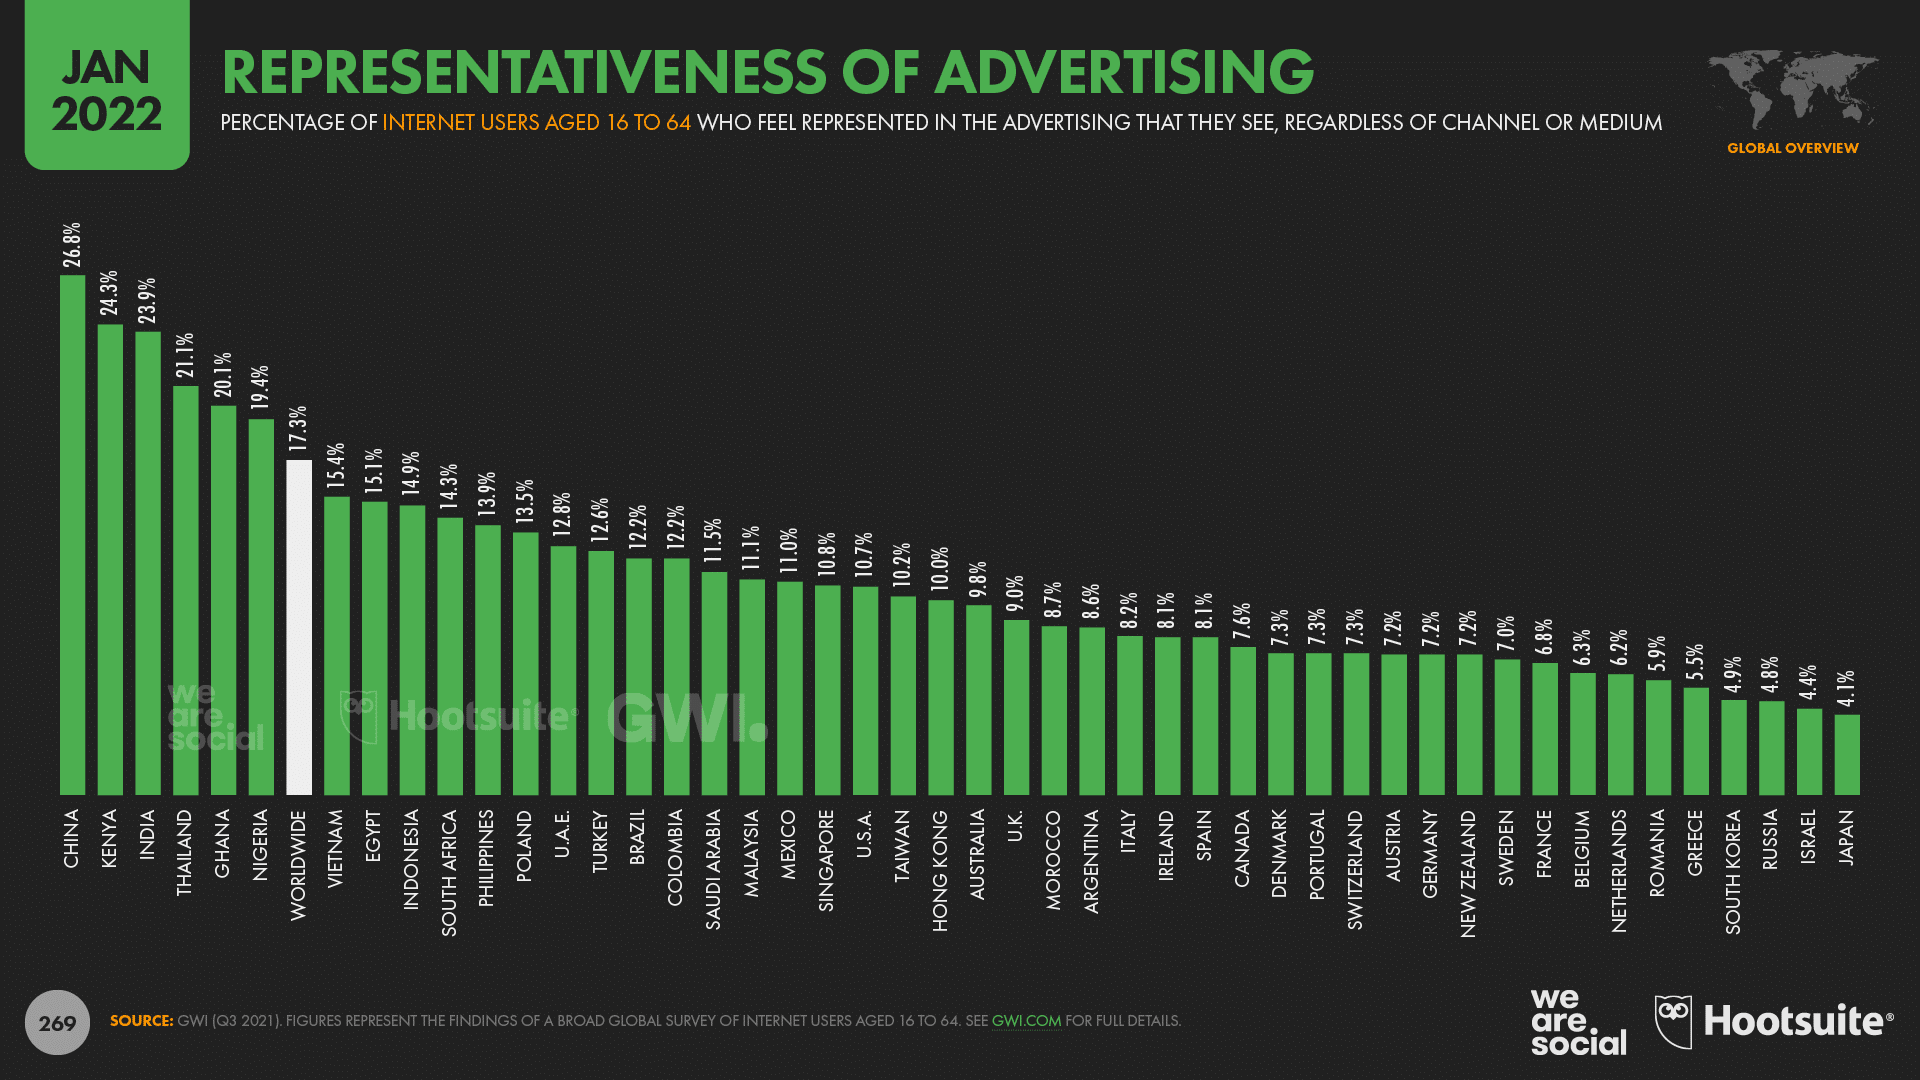 chart showing representativeness of advertising